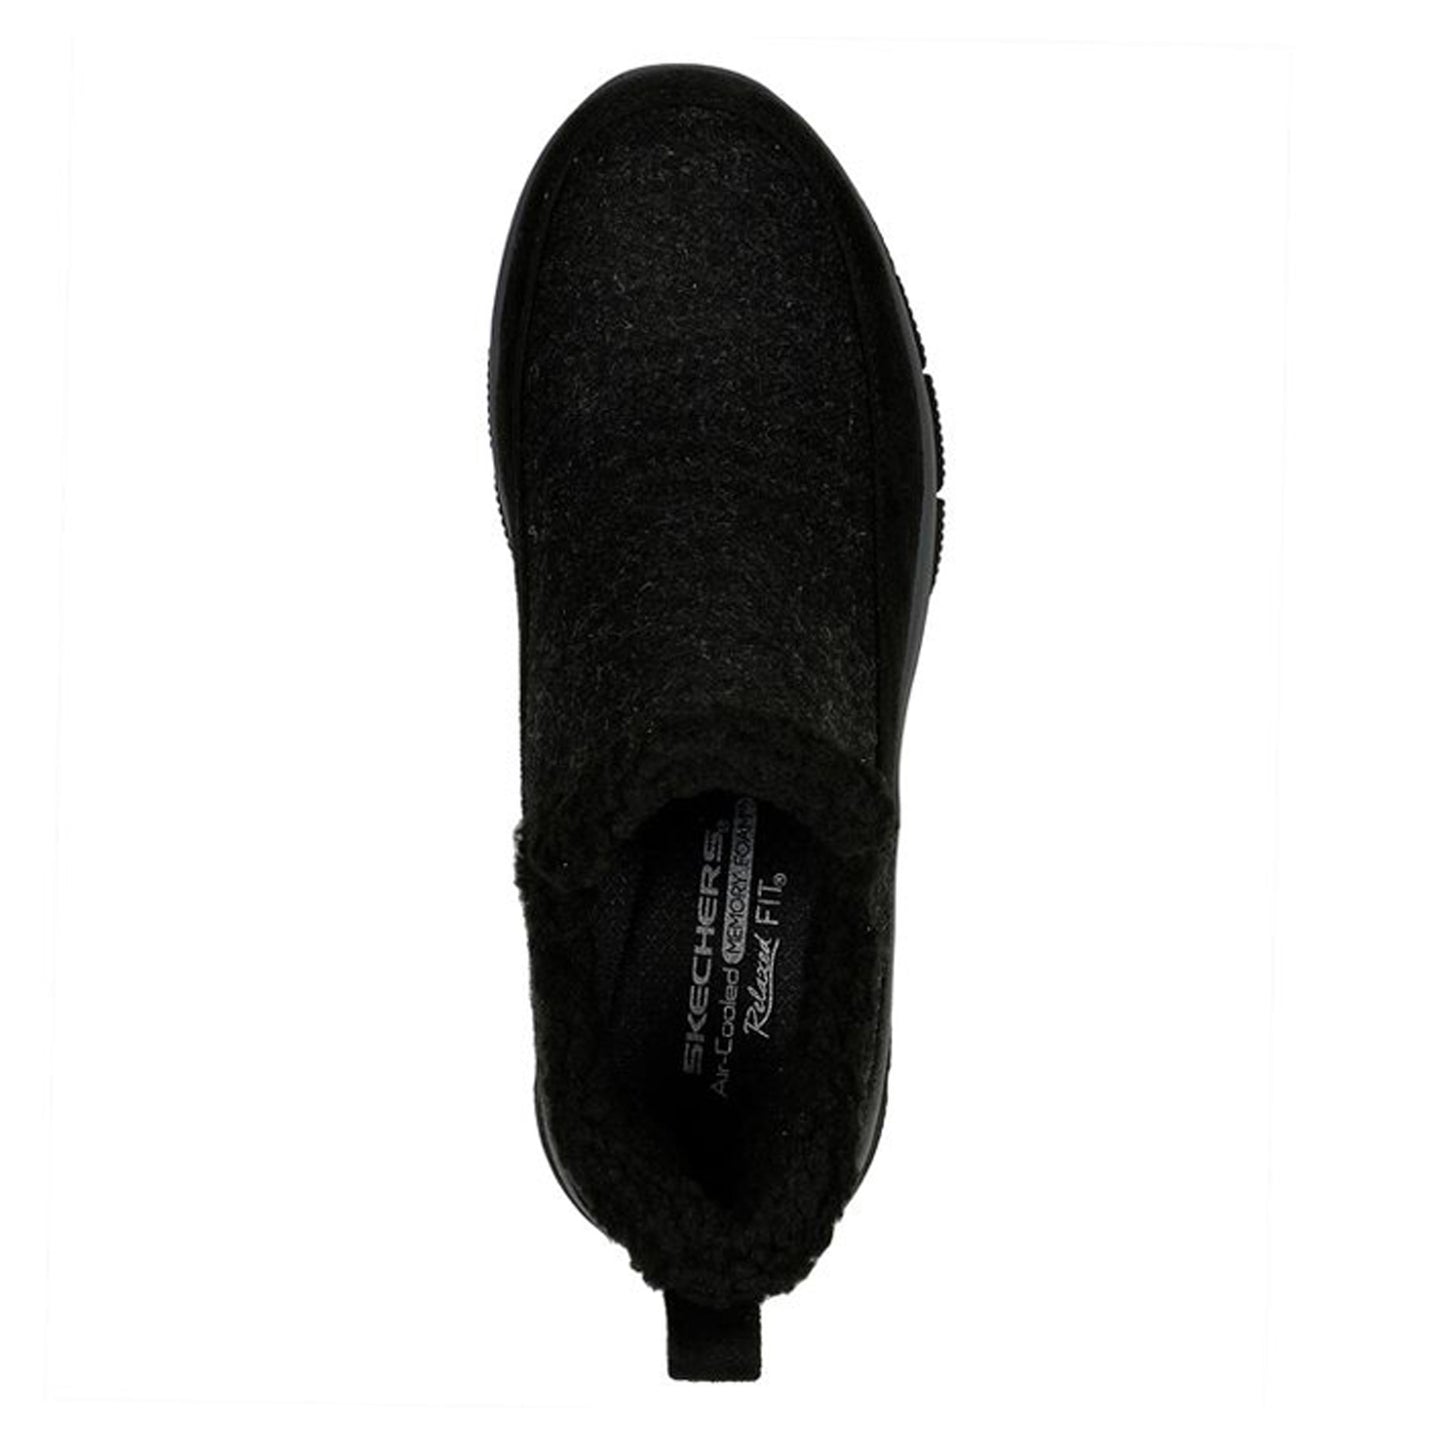 Peltz Shoes  Women's Skechers Relaxed Fit: Easy Going - Winter Kiss Boot BLACK 167400-BBK